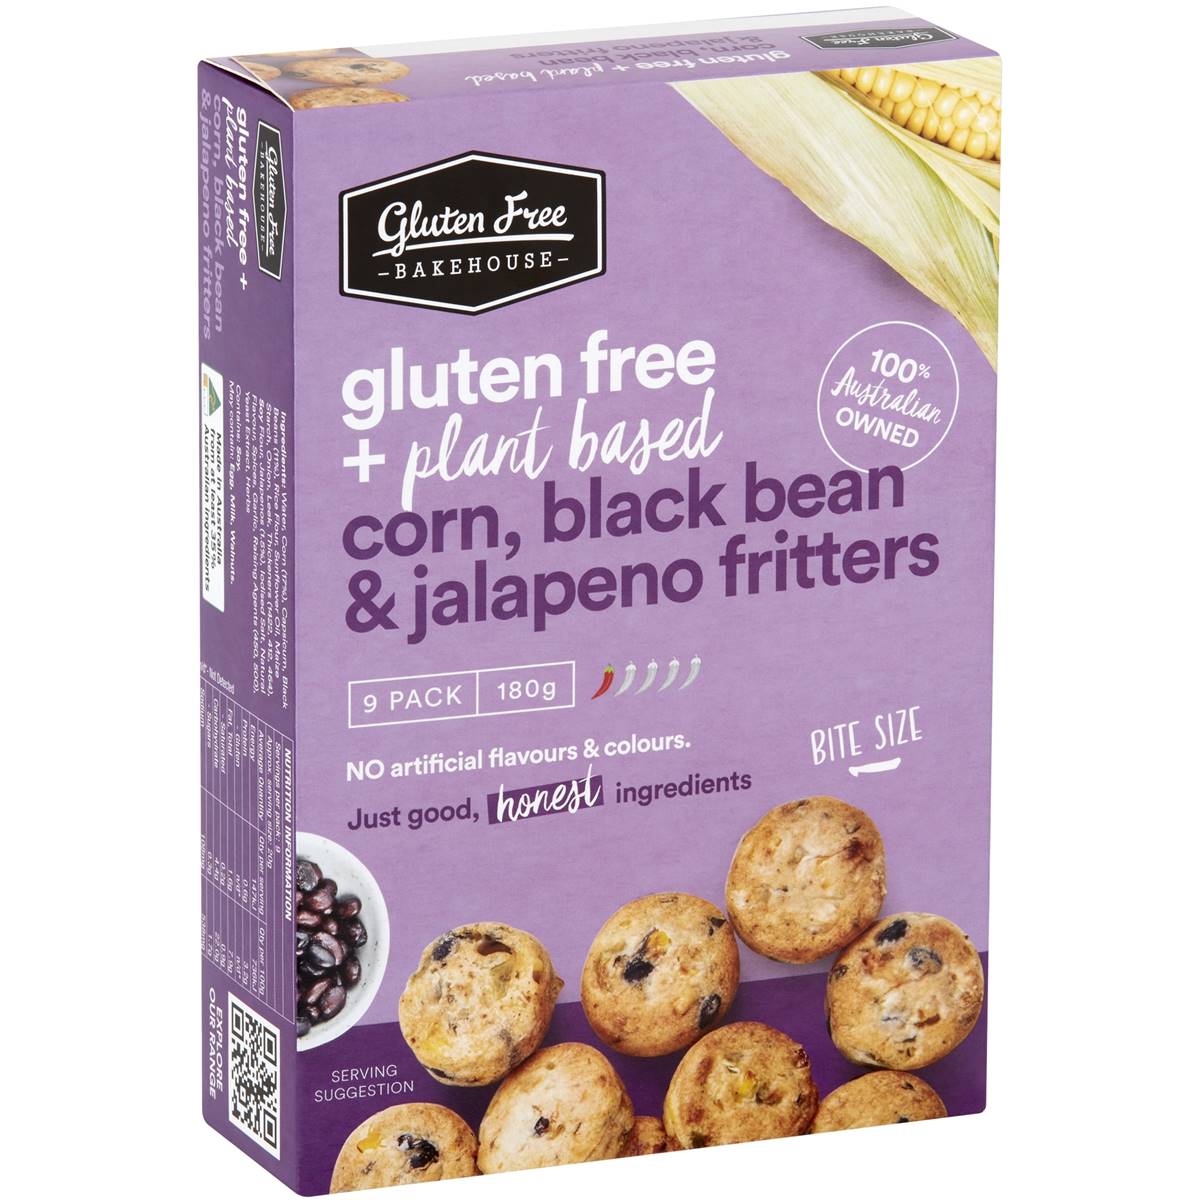 Calories in Gluten Free Bakehouse Gluten Free Corn Black Bean & Jalapeno Fritters